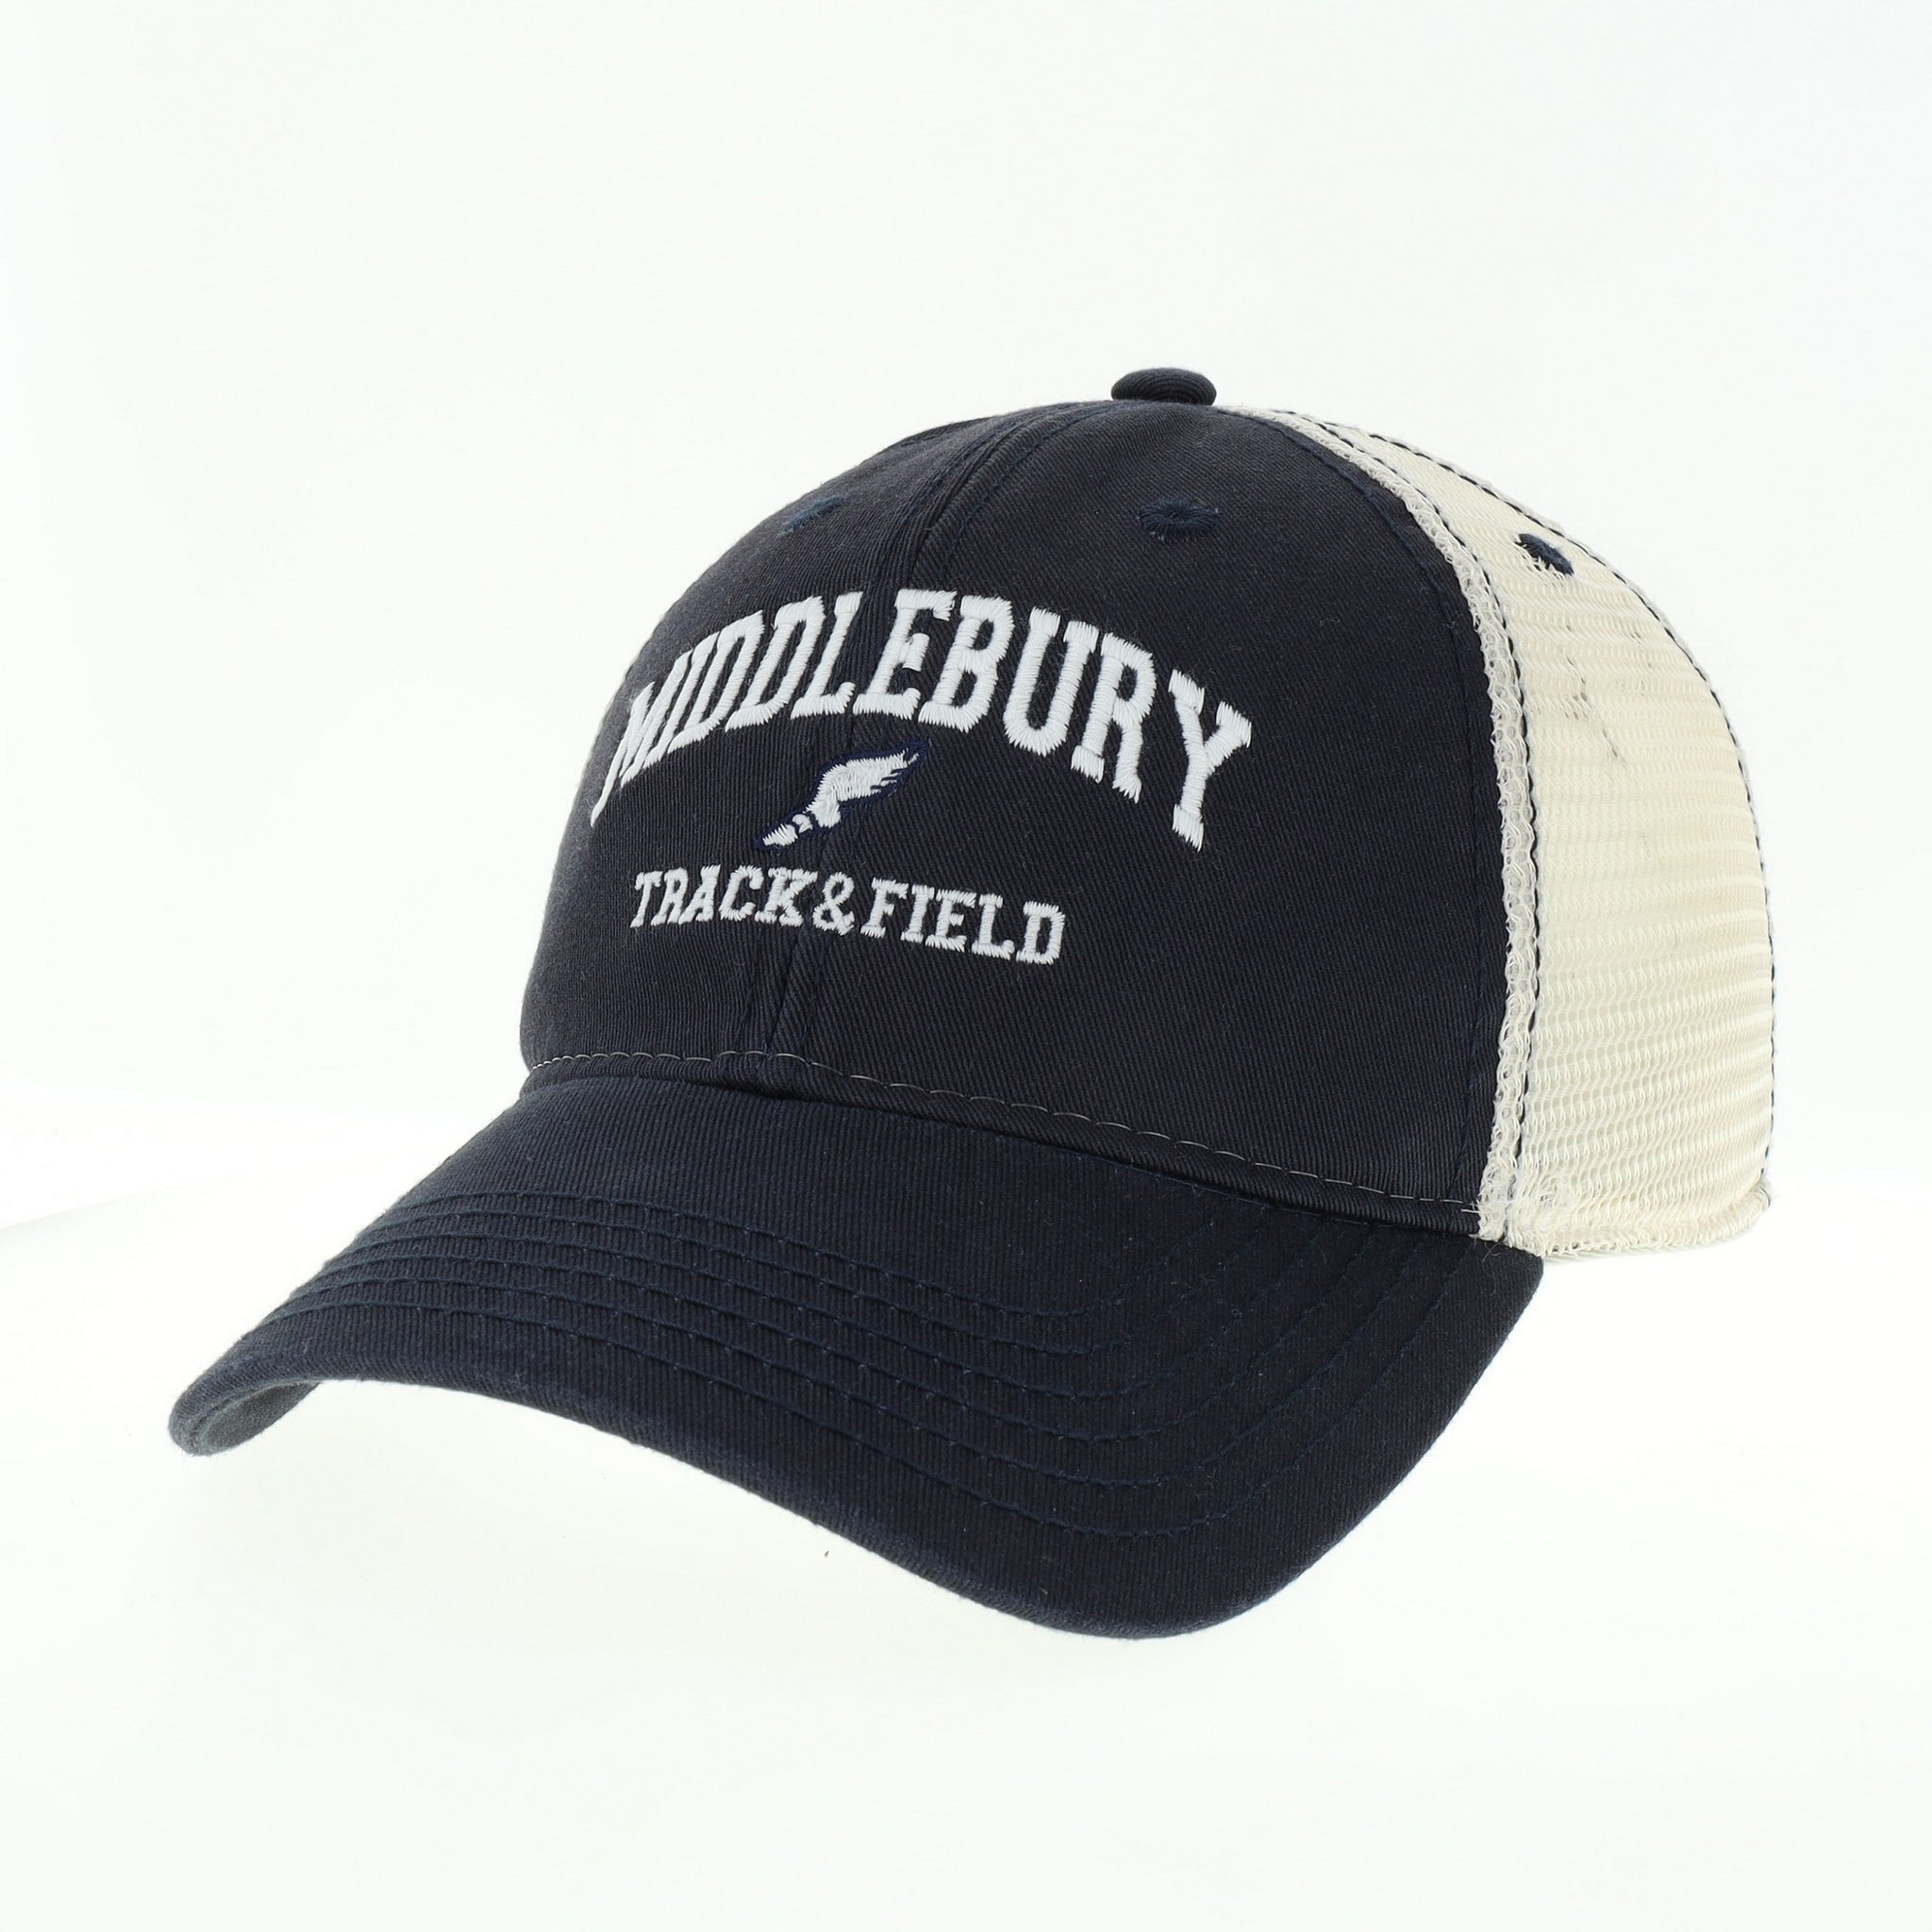 Middlebury Track & Field Trucker Hat